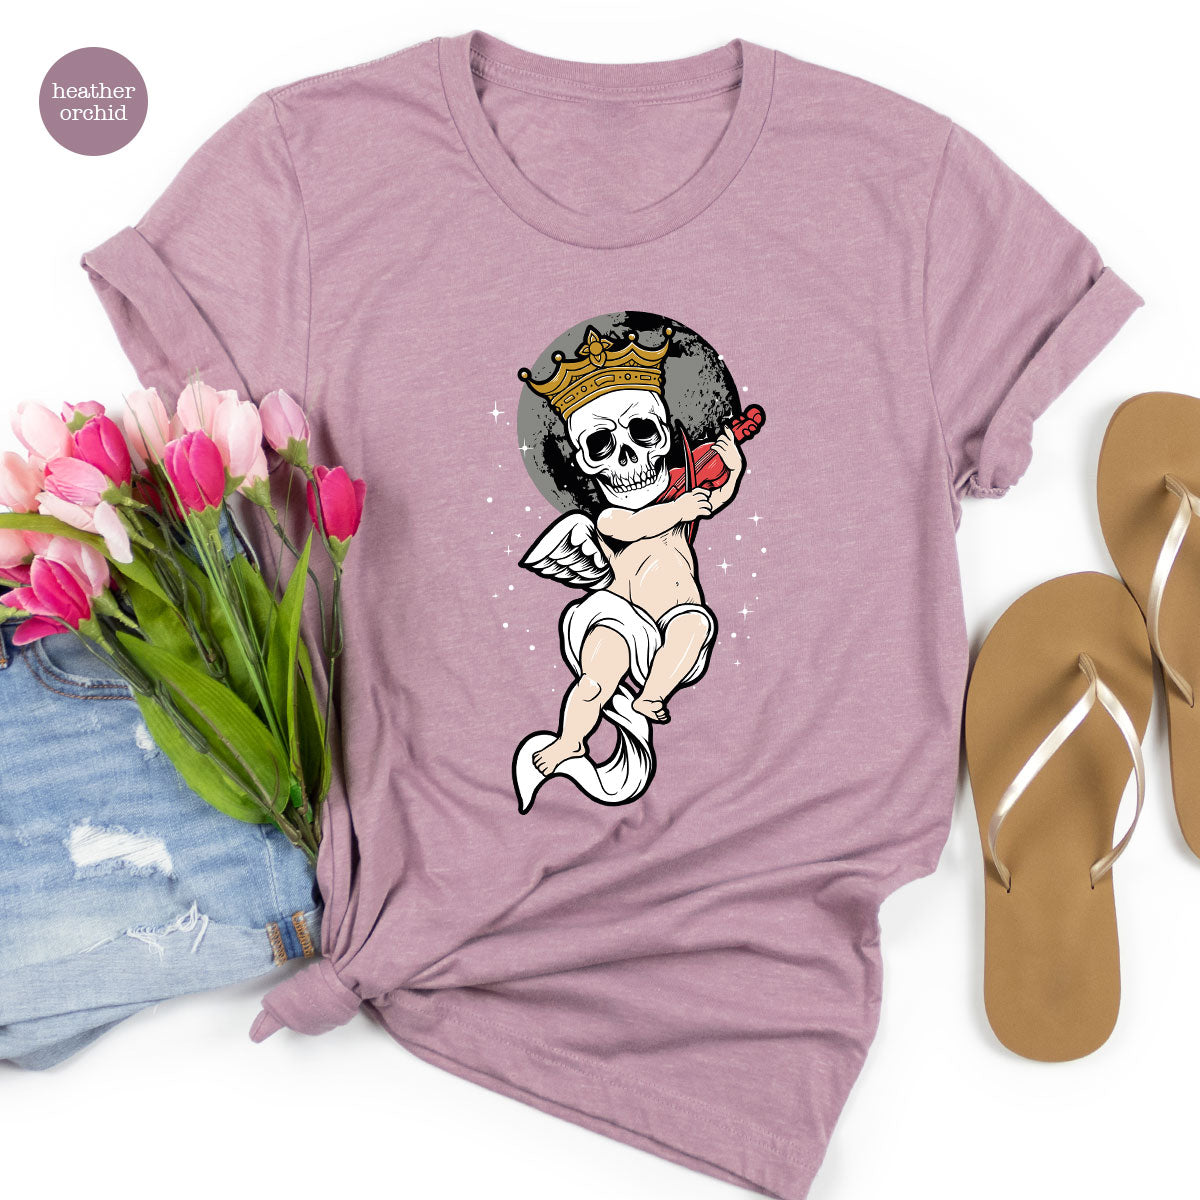 Funny Skeleton Halloween T-Shirt, Baby Skeleton Halloween Tee, Best Halloween Gift